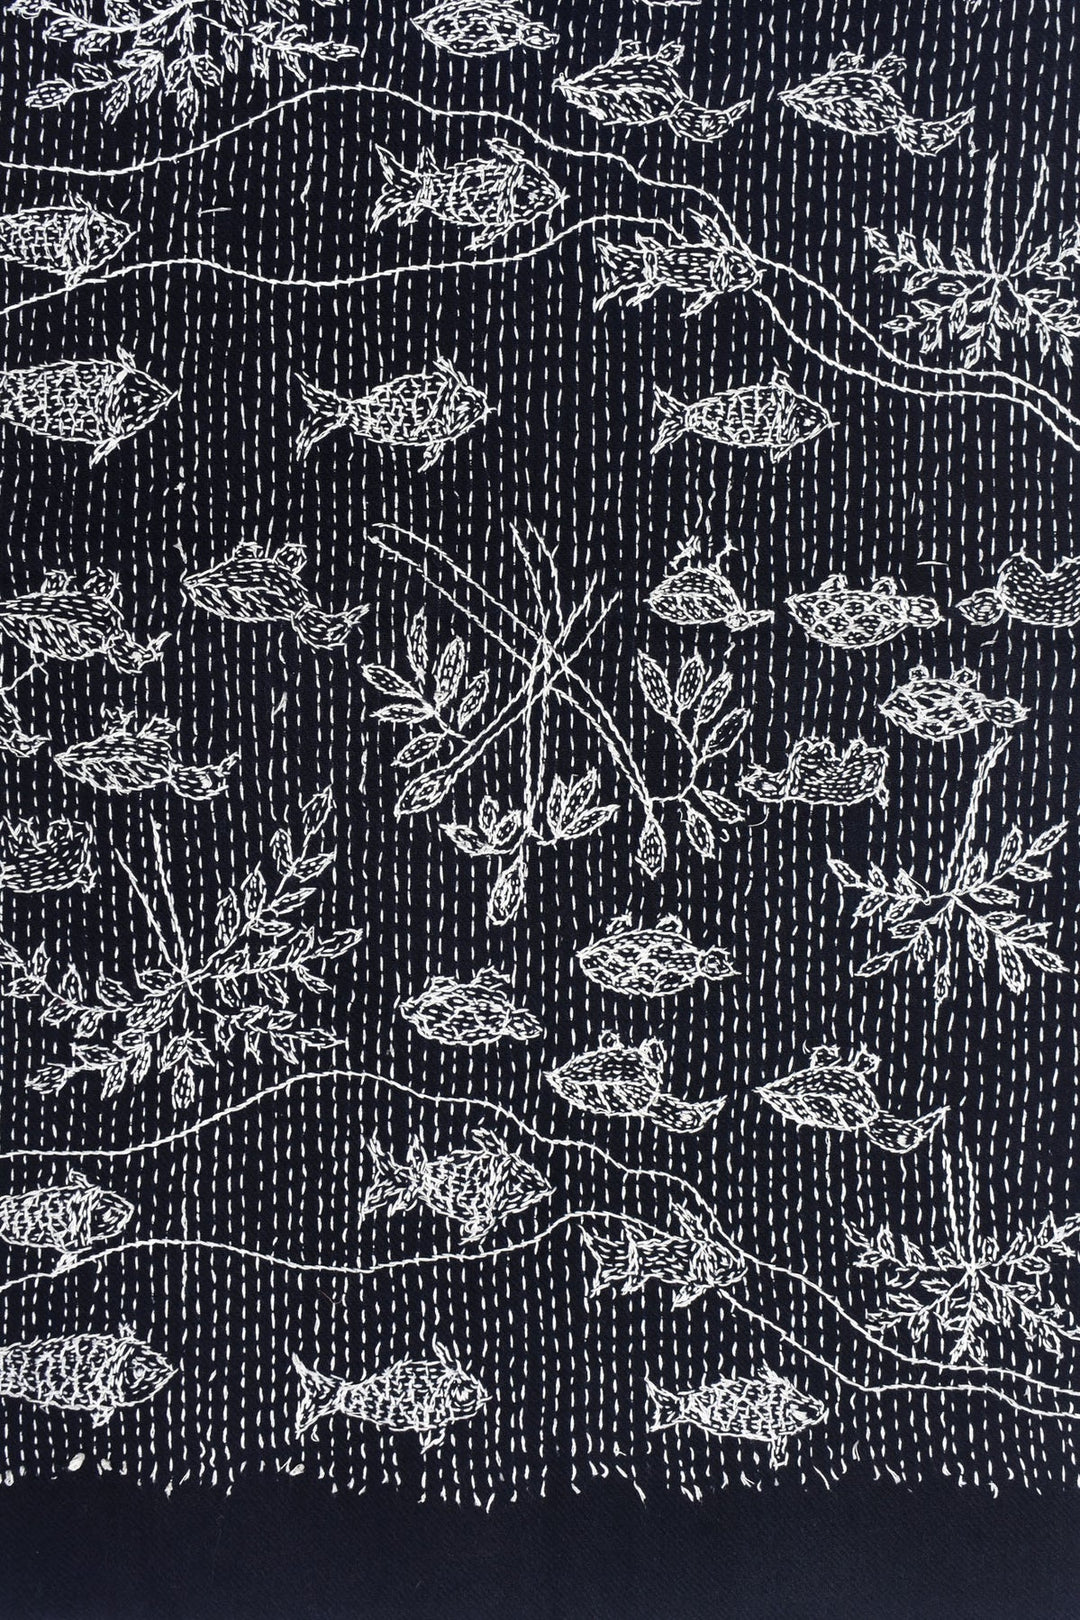 Animal Embroidered Cashmere Stole - Winter Accessory | Kara Soft Cashmere Stole - Black